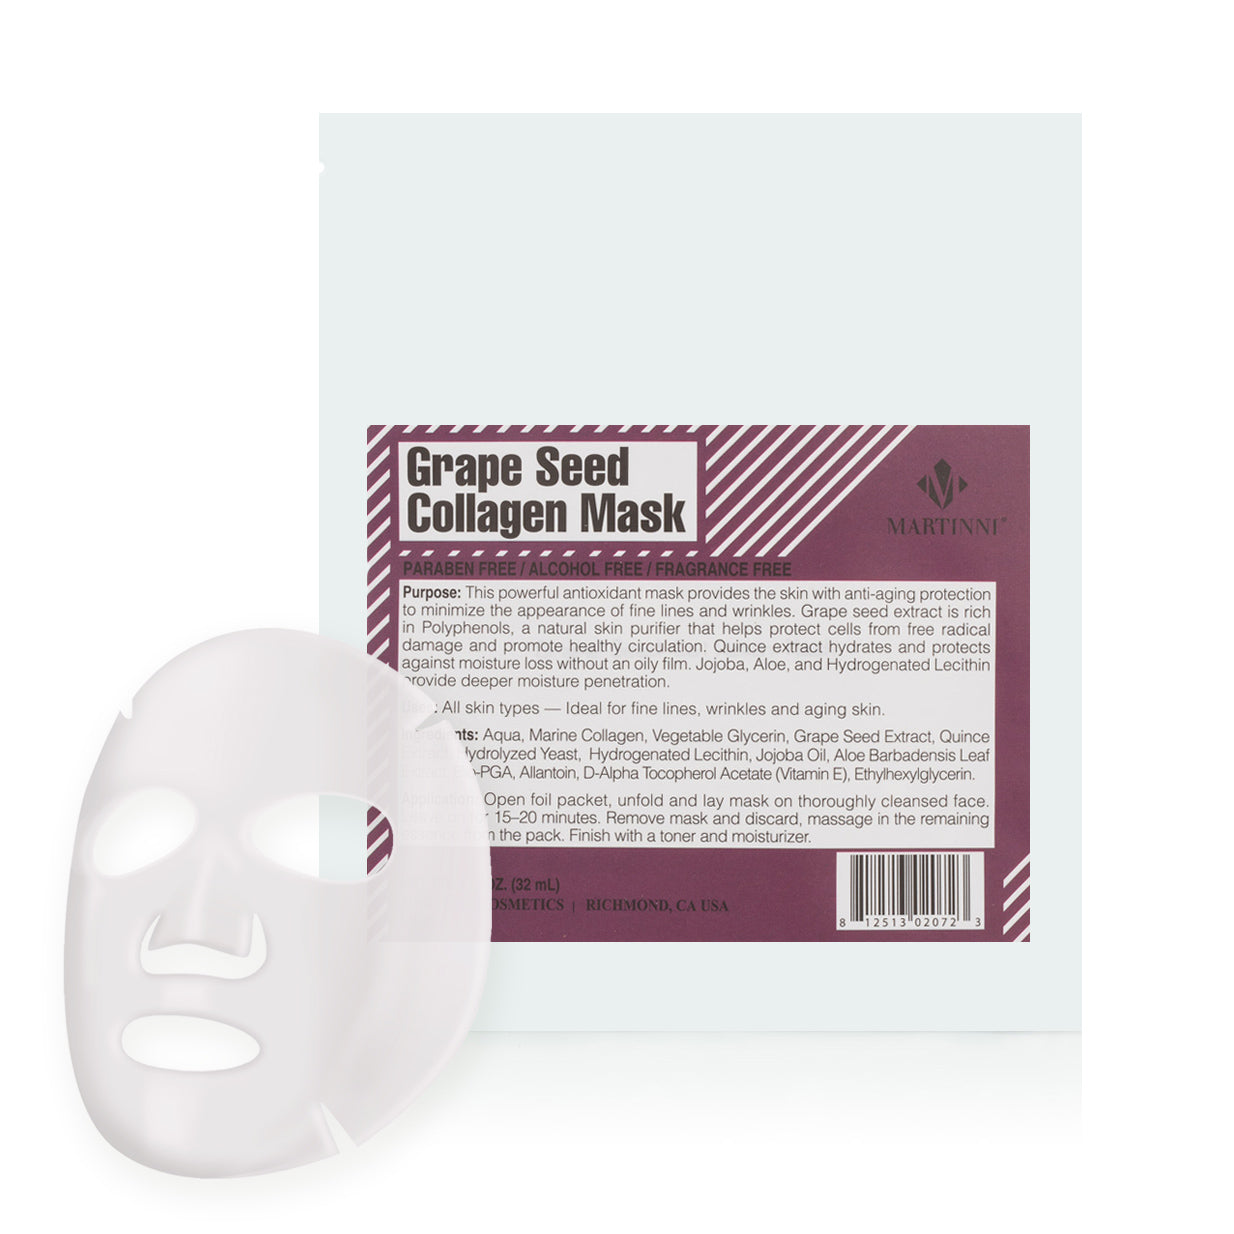 Retinol & Collagen Alternative Firming Grape Seed Mask 1.62 fl oz. (48ml)